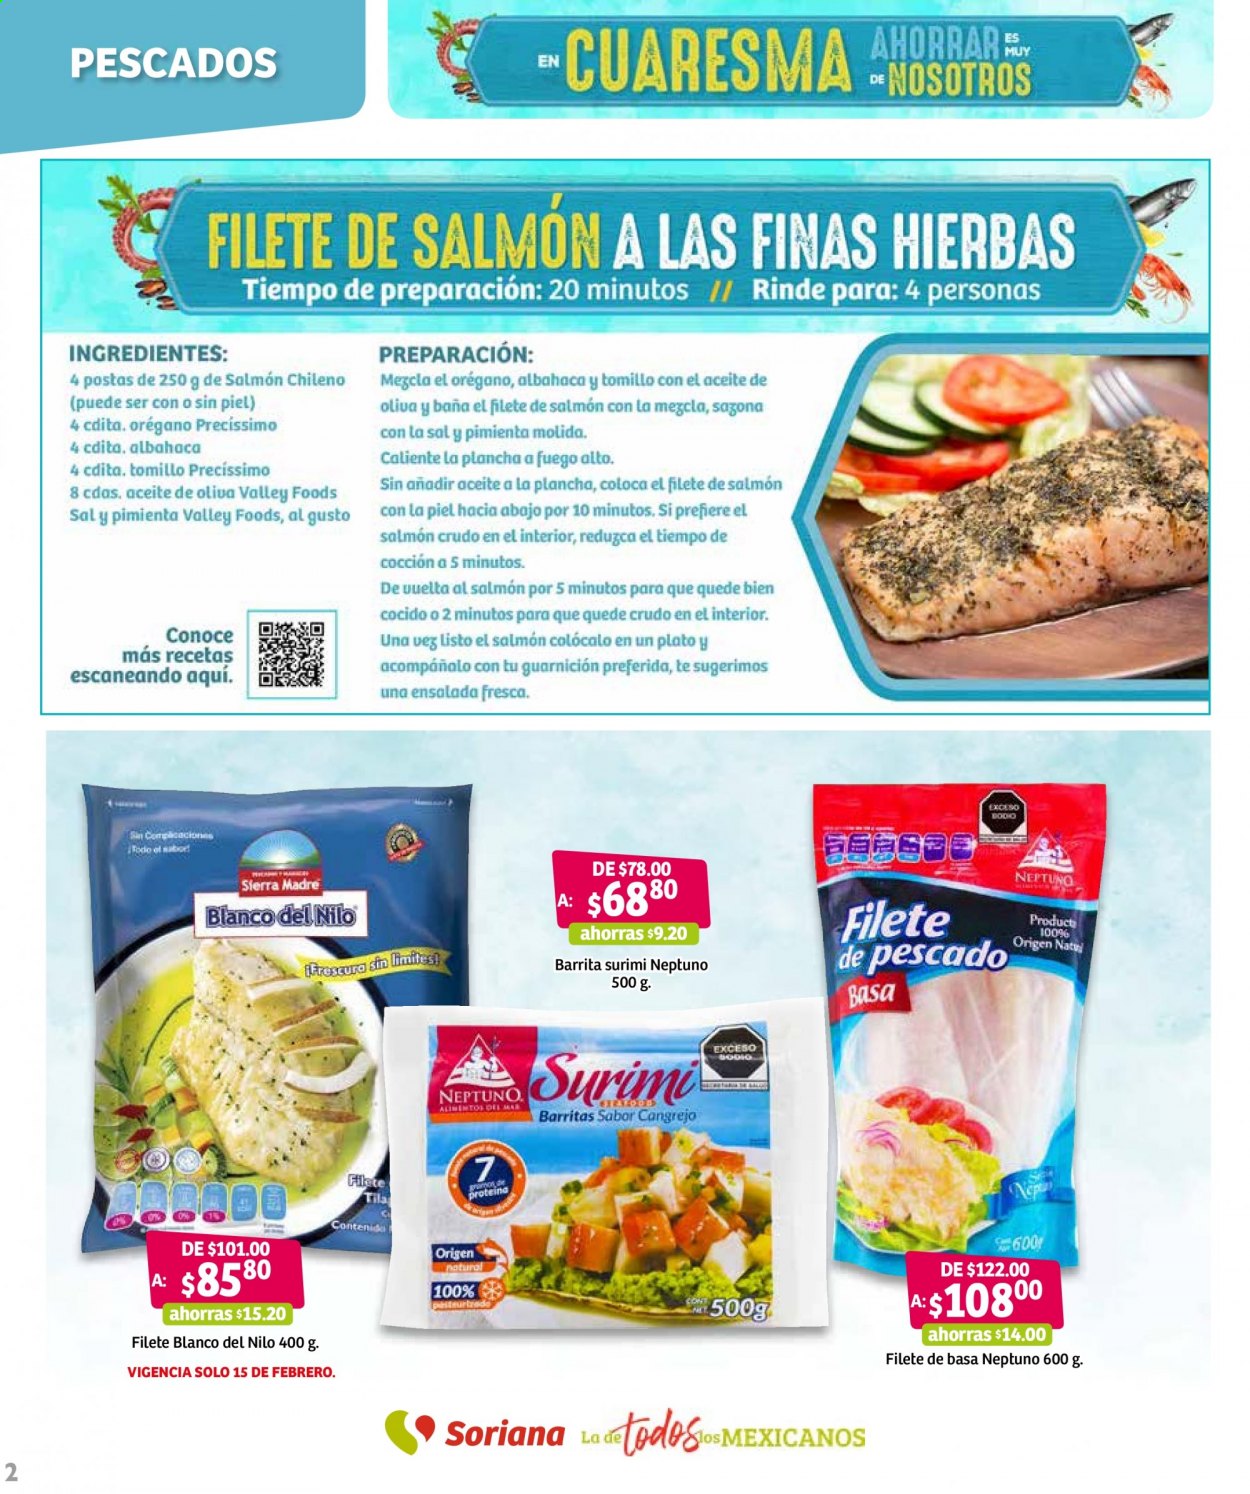 thumbnail - Folleto actual Soriana Híper - 15.2.2021 - 25.2.2021 - Ventas - cangrejo, surimi, salmón, filete de salmón. Página 2.